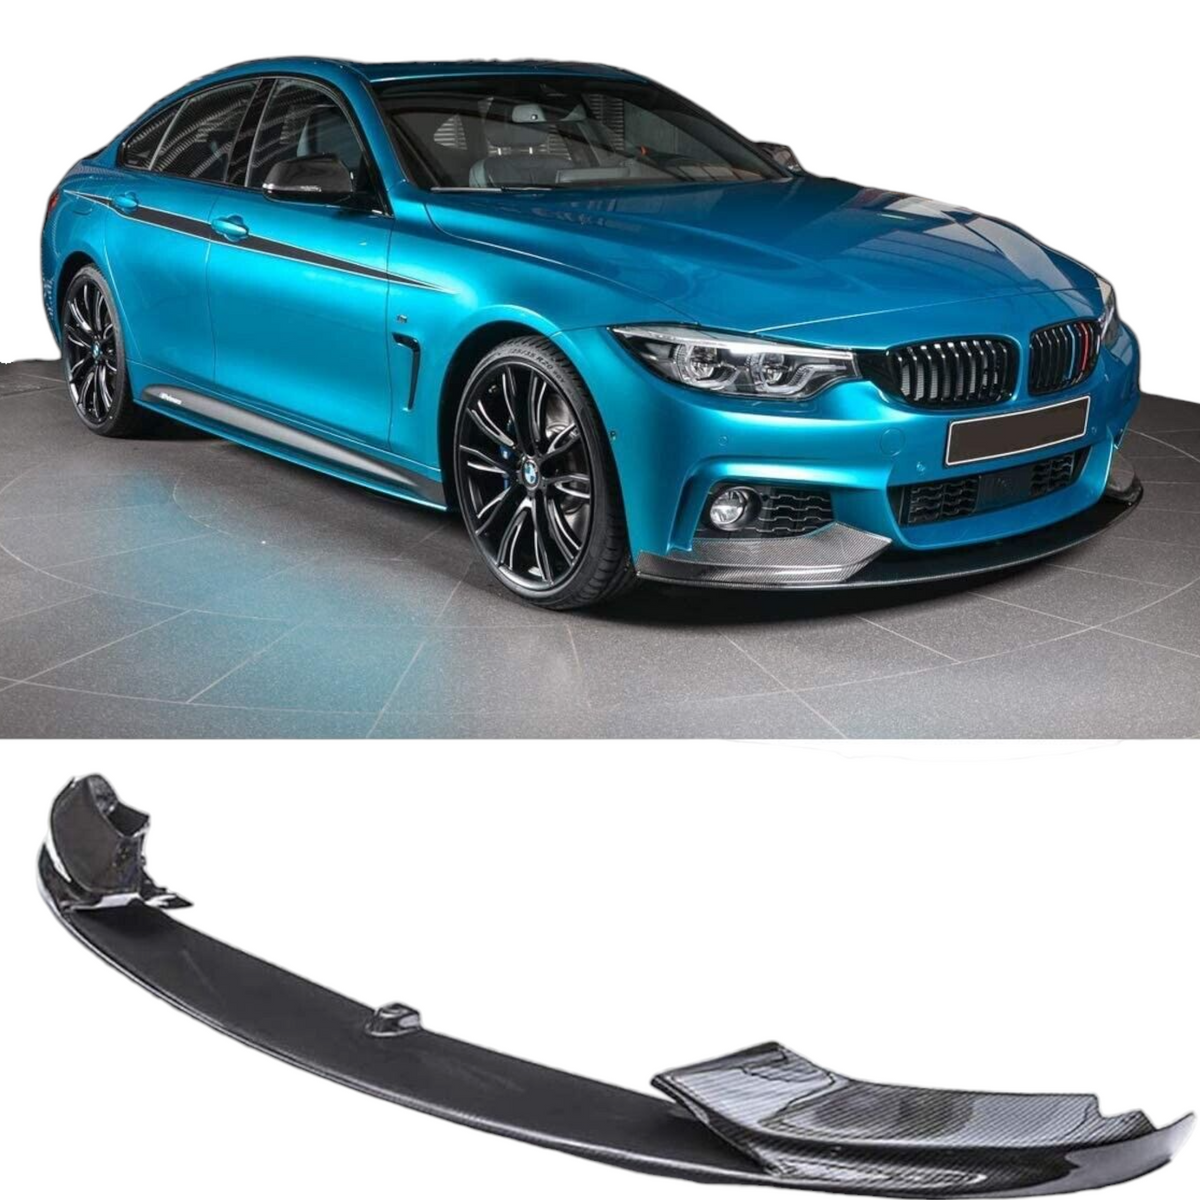 Full Body Kit - Fits BMW F33 4 Series - Carbon Look